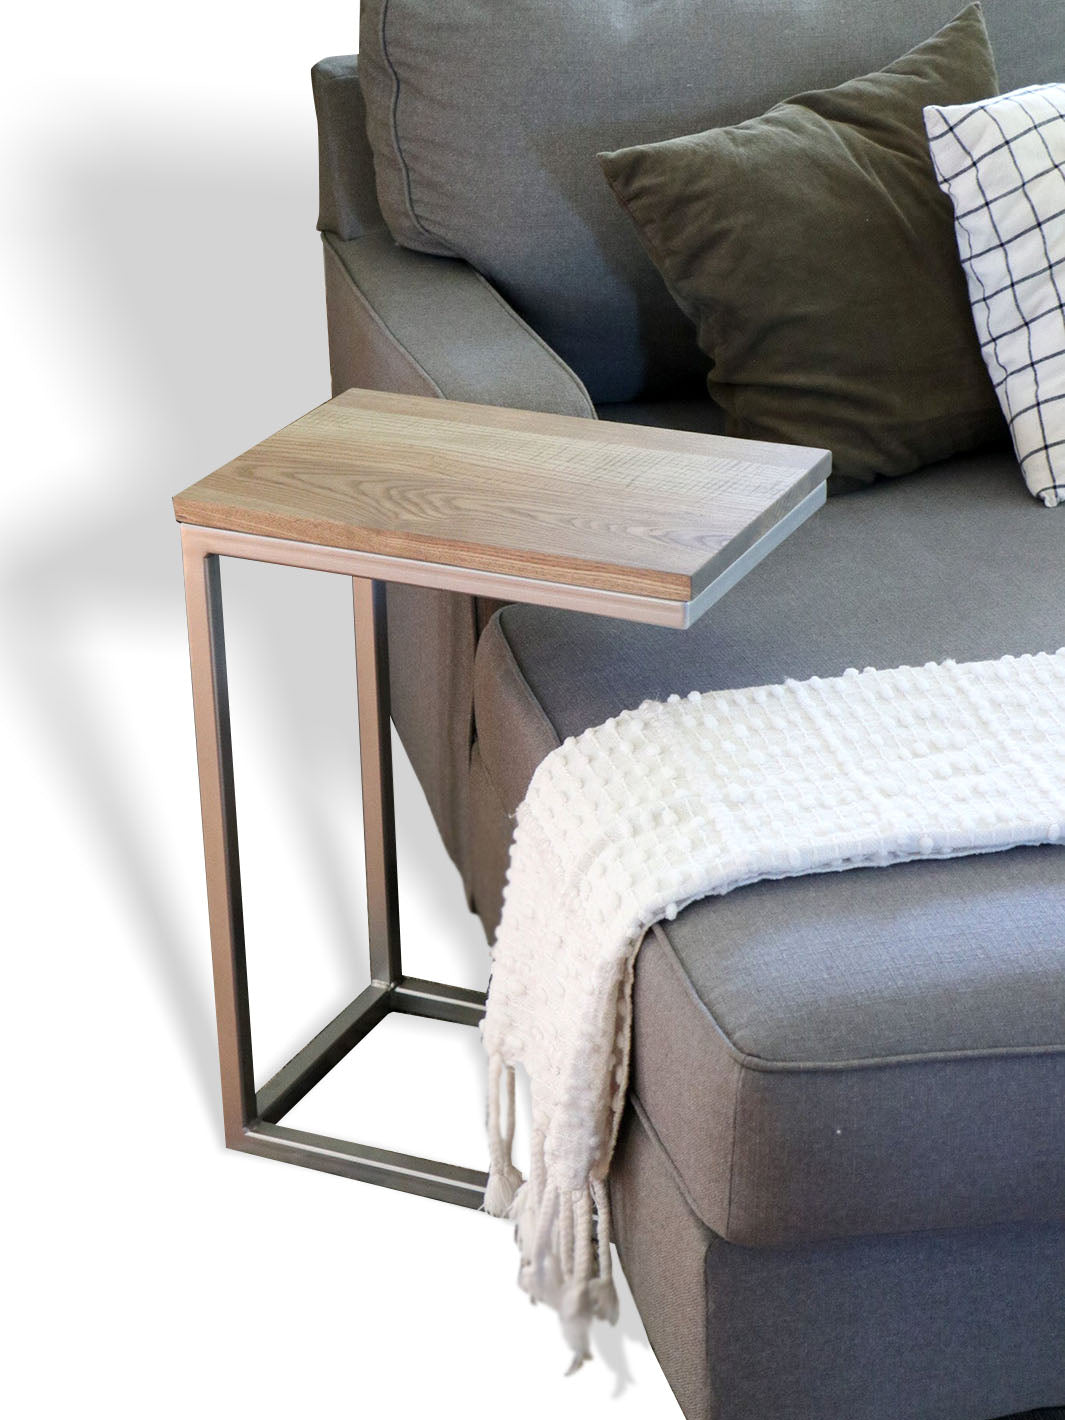 Earthly Comfort Solid Ash Wood & Silver Metal C Table Earthly Comfort Side Tables 1834